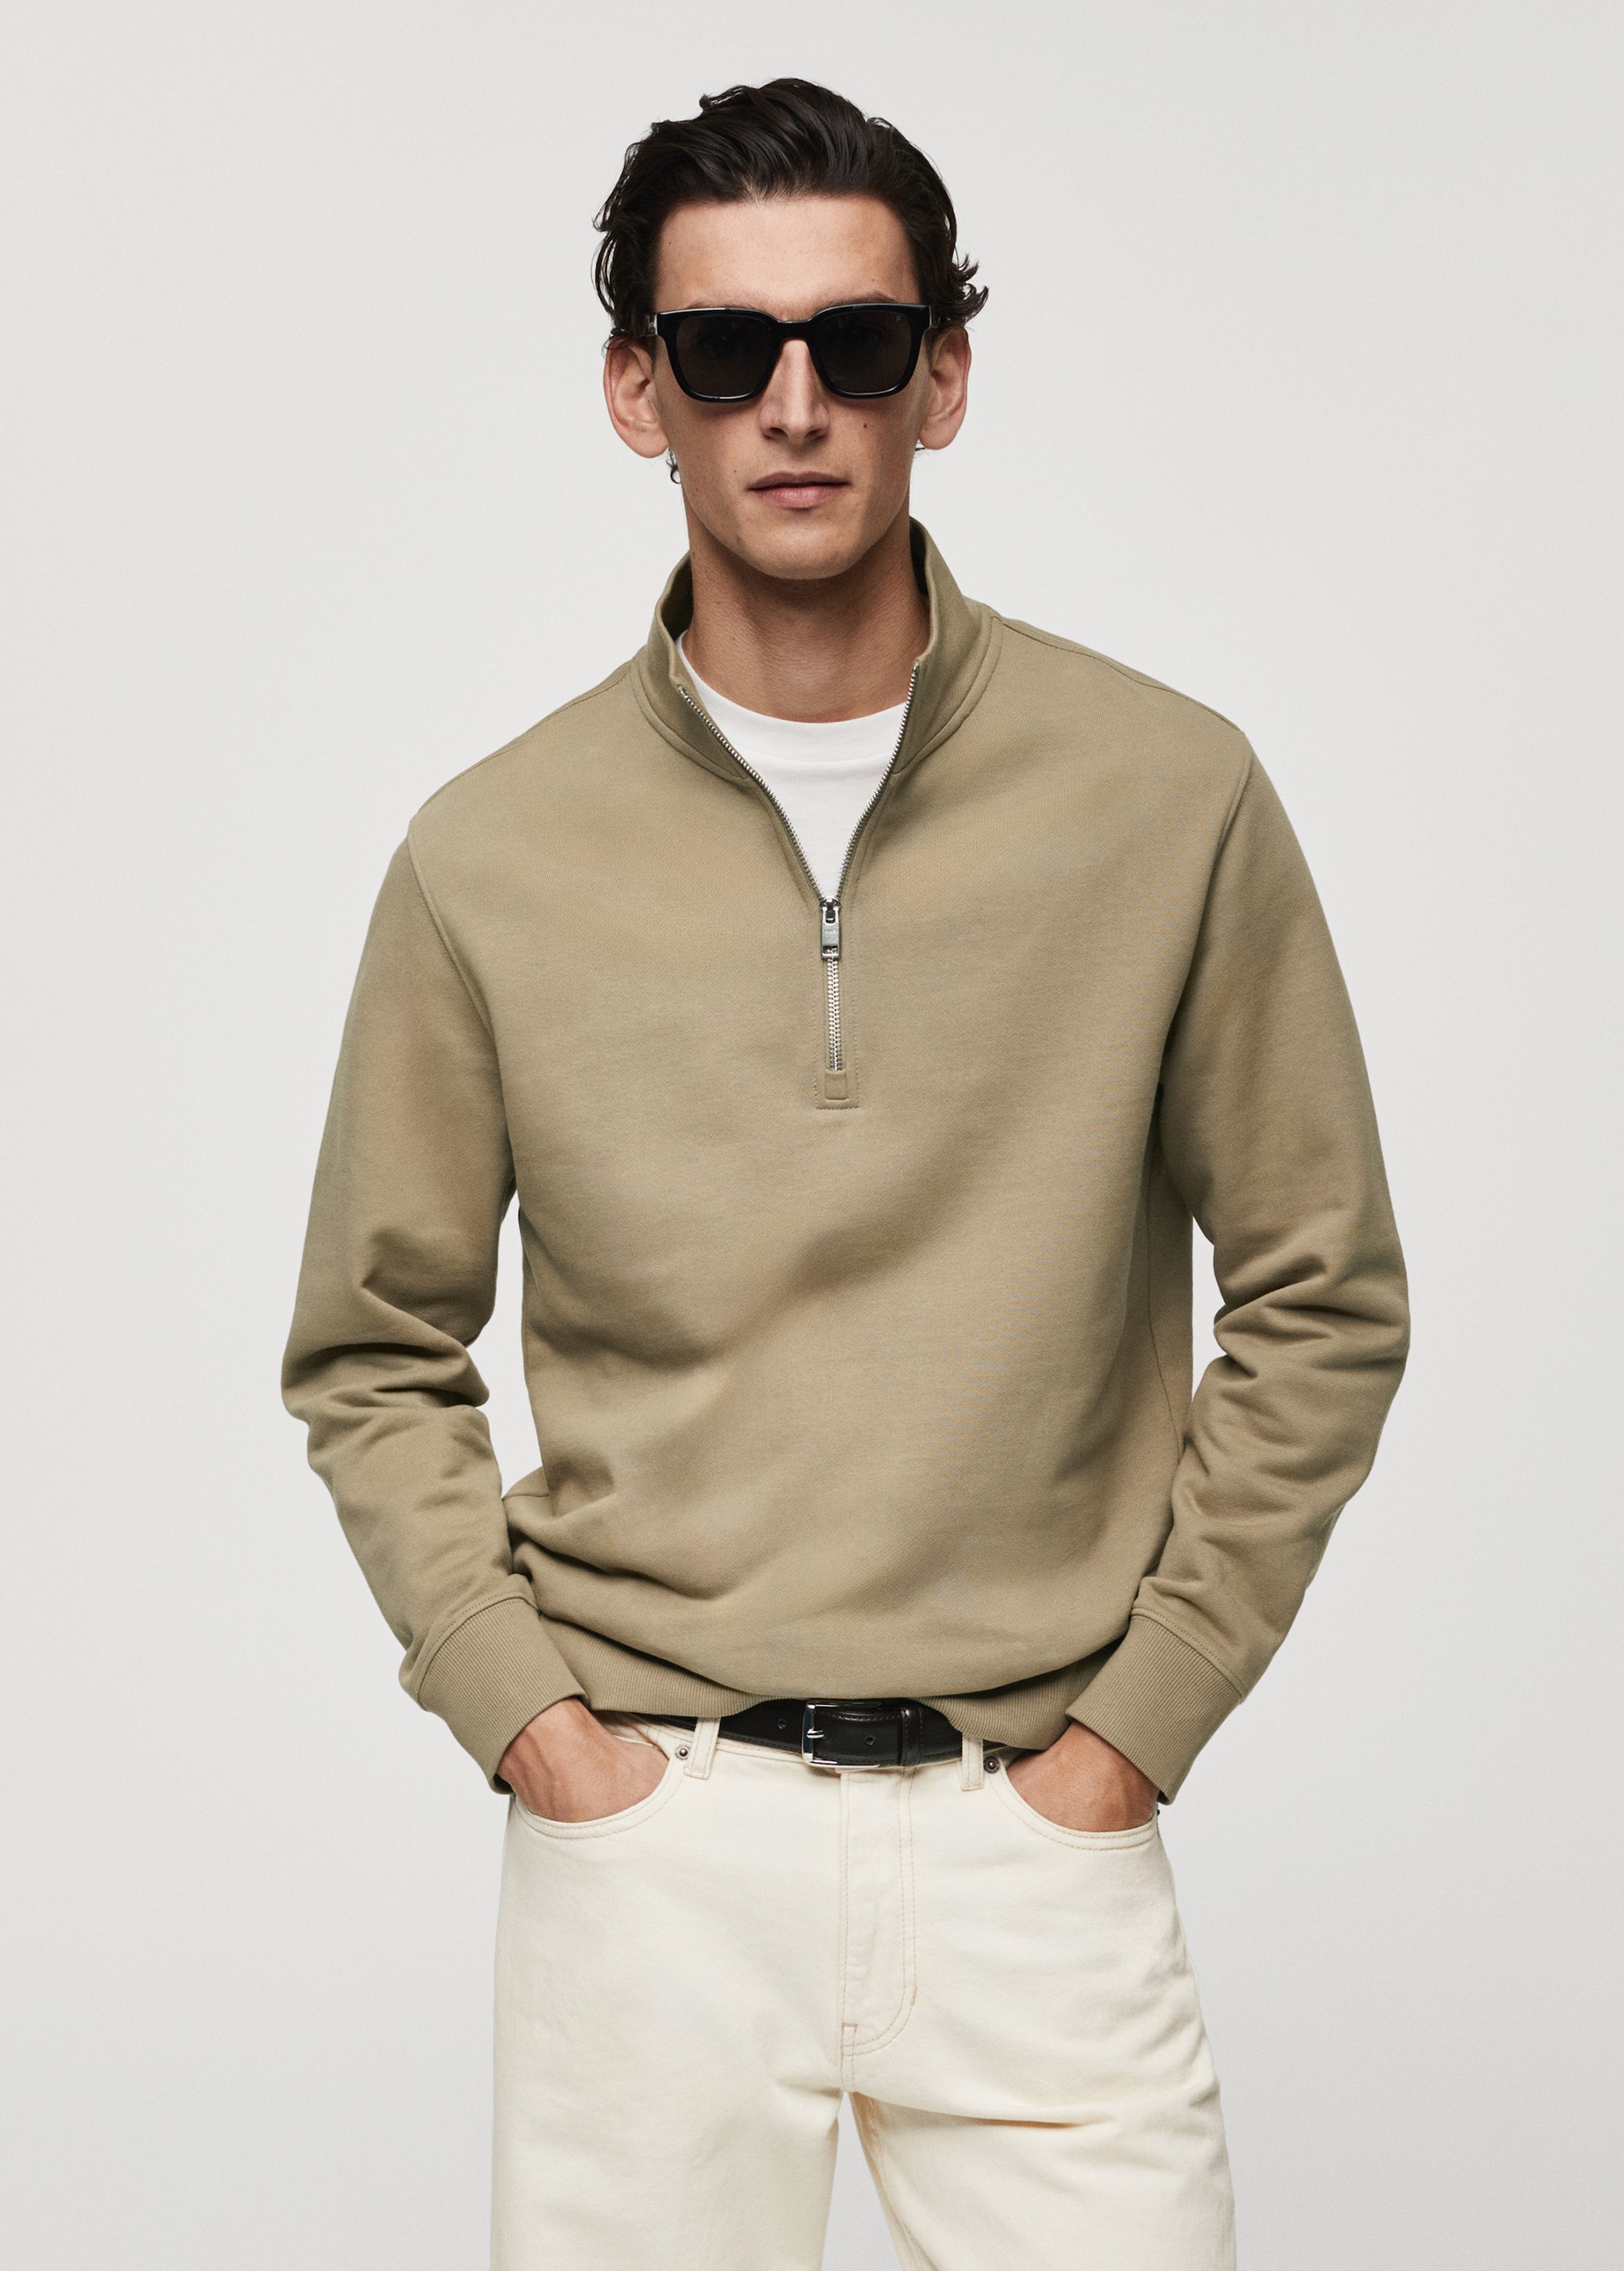 Zipper cotton sweater - Medium plane